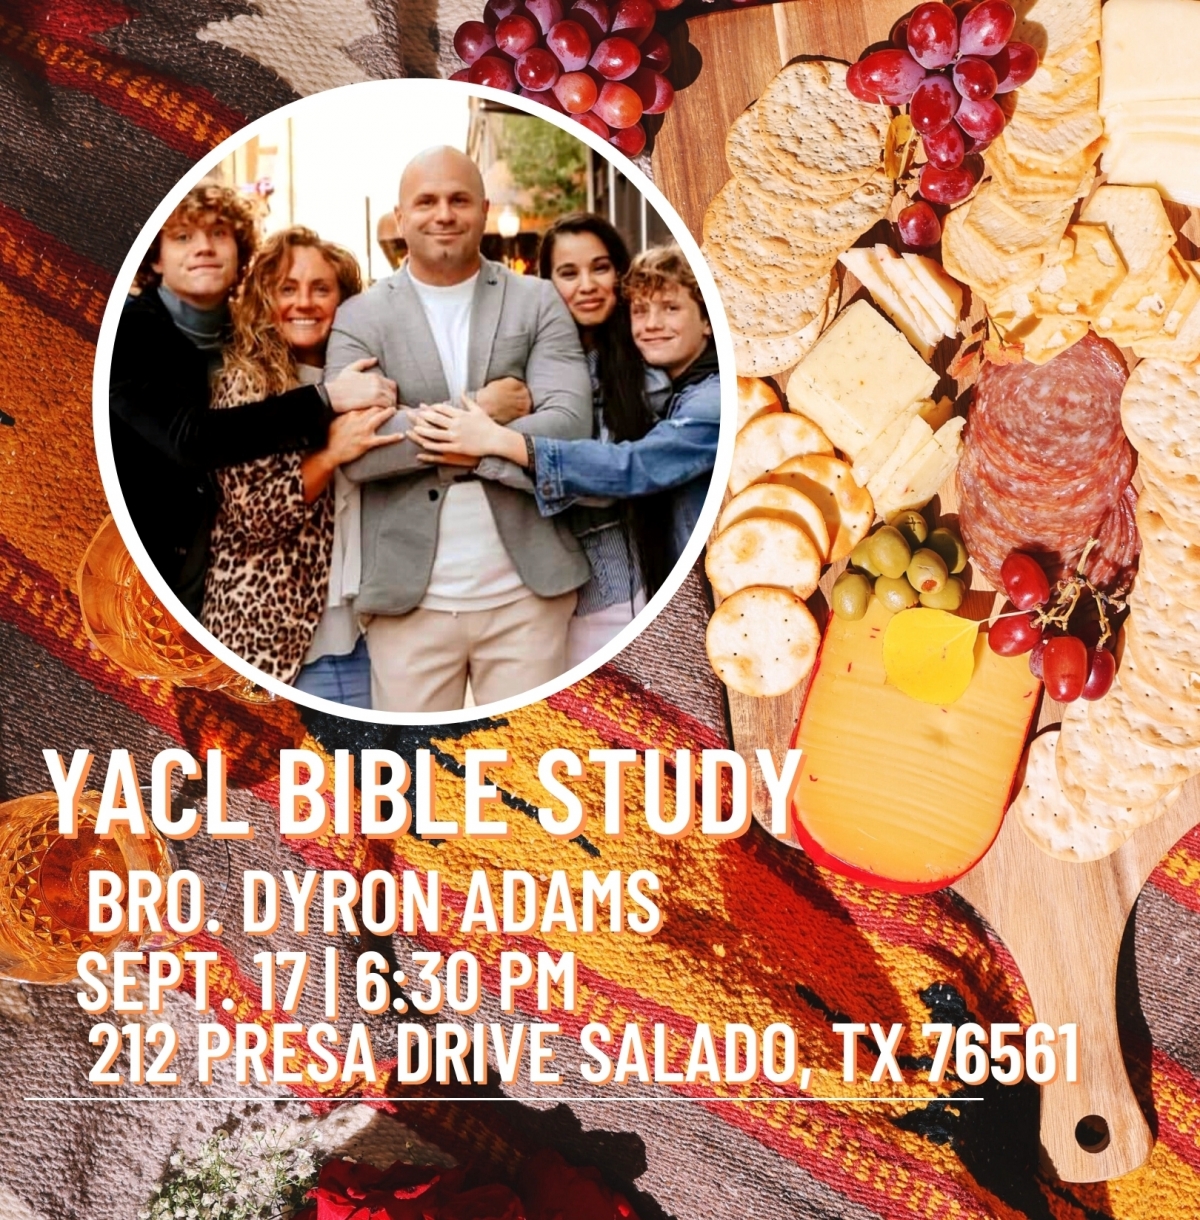 [YACL Bible Study with Bro. Dyron Adams]